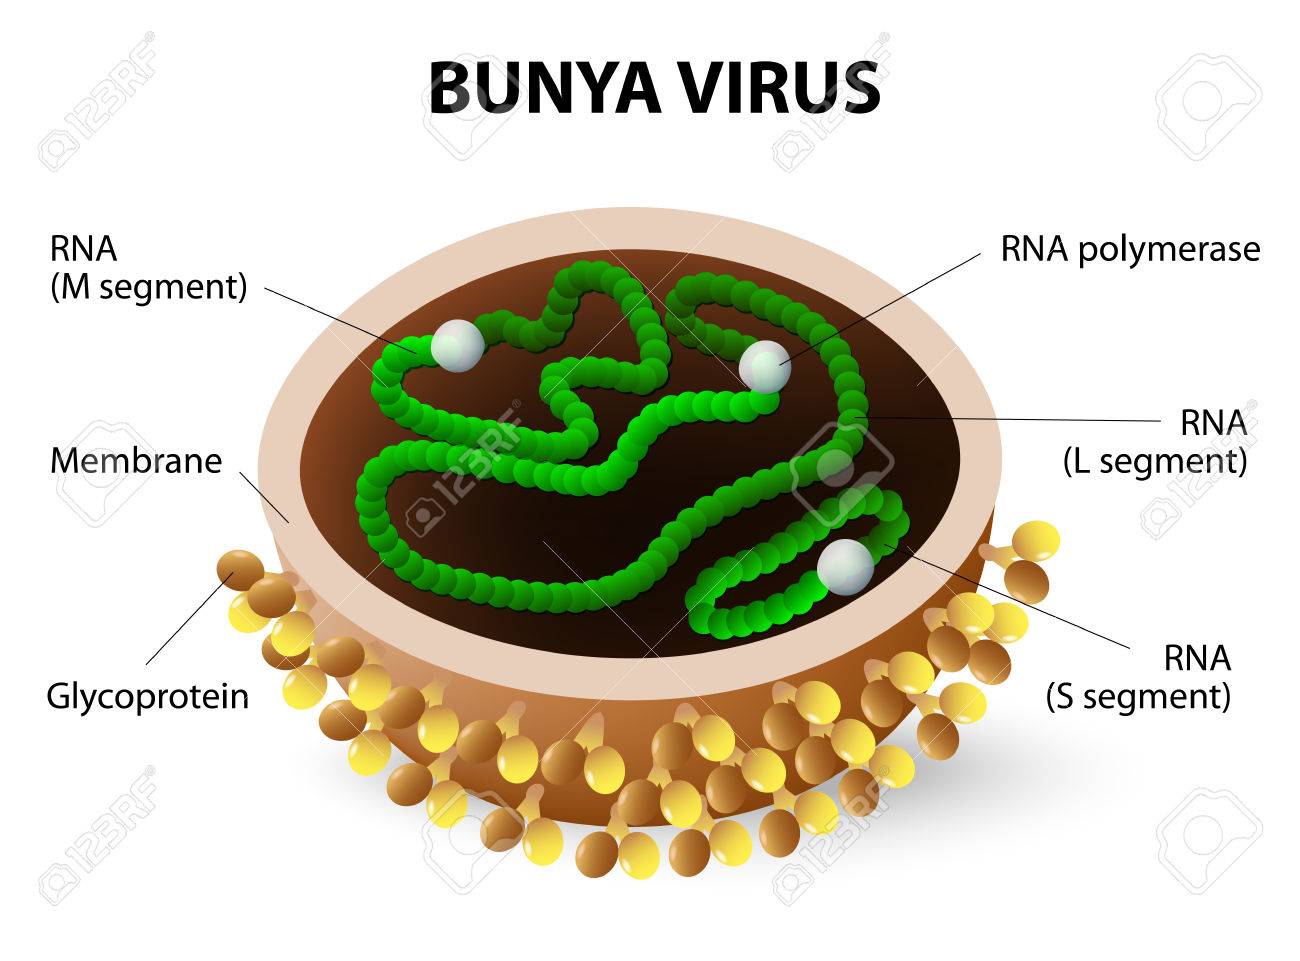 Foto: Bunya virus cause hemorrhagic fever. Virion structure